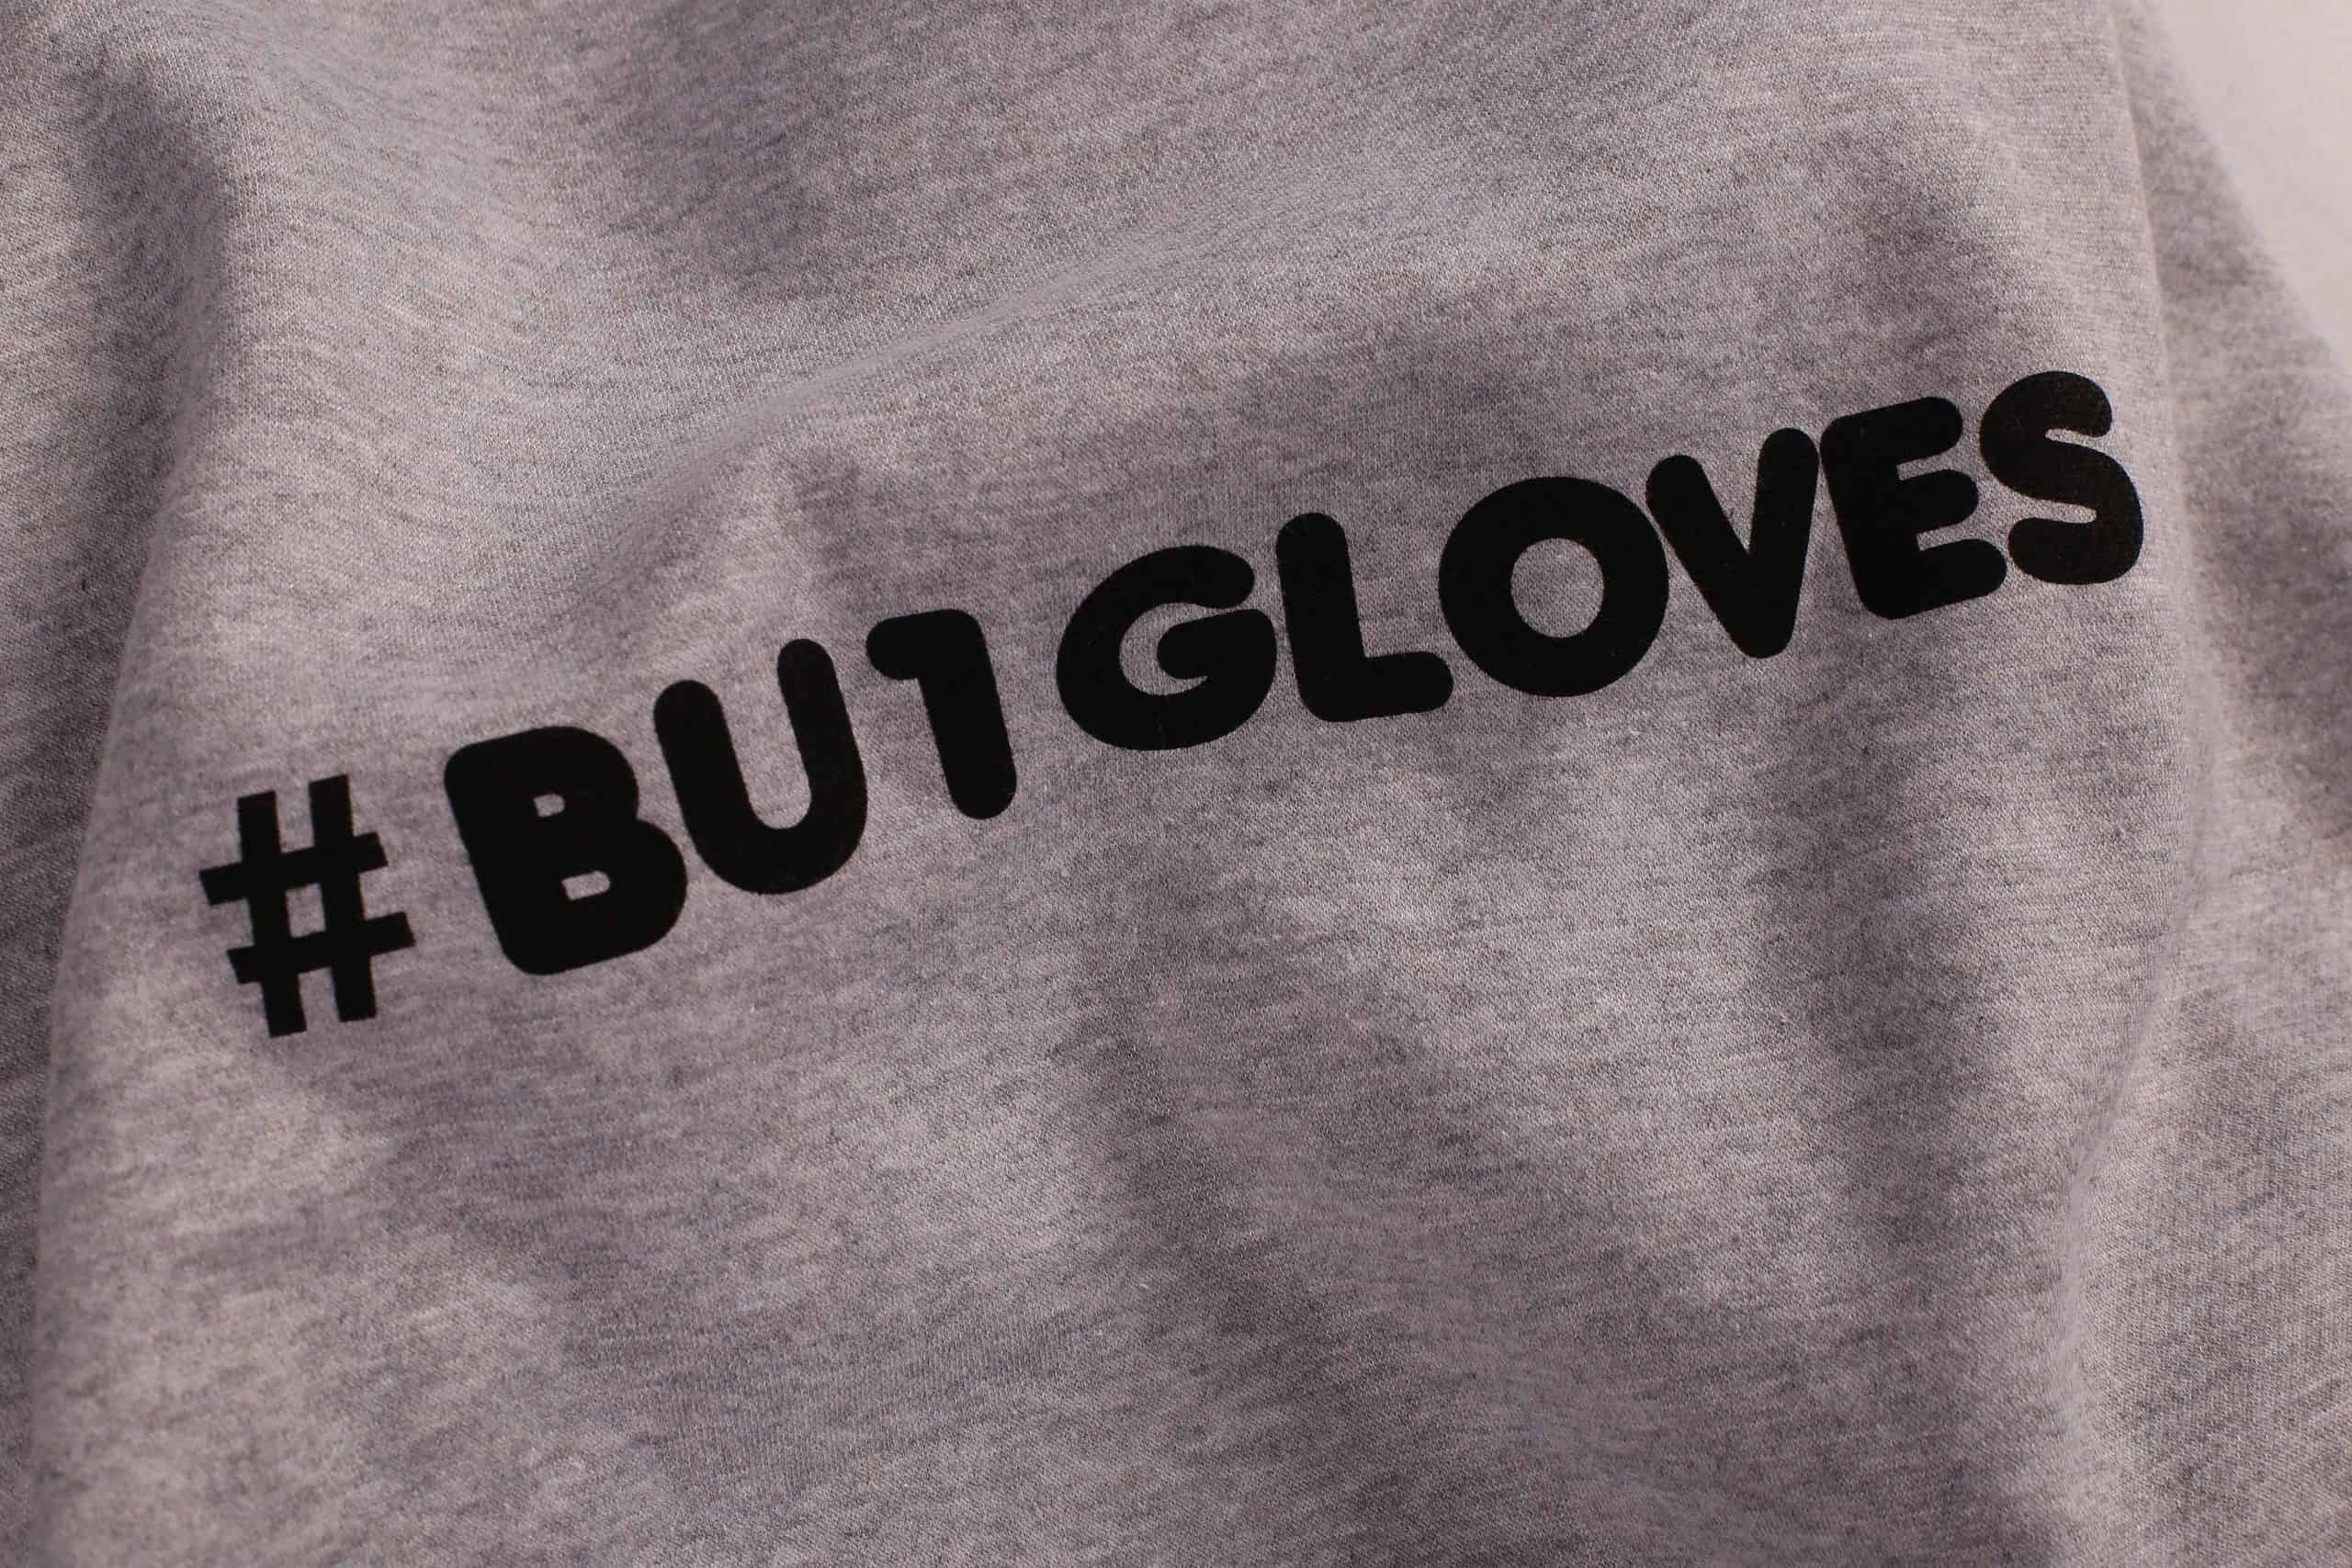 BU1 Sweatshirt grau #BU1GLOVES